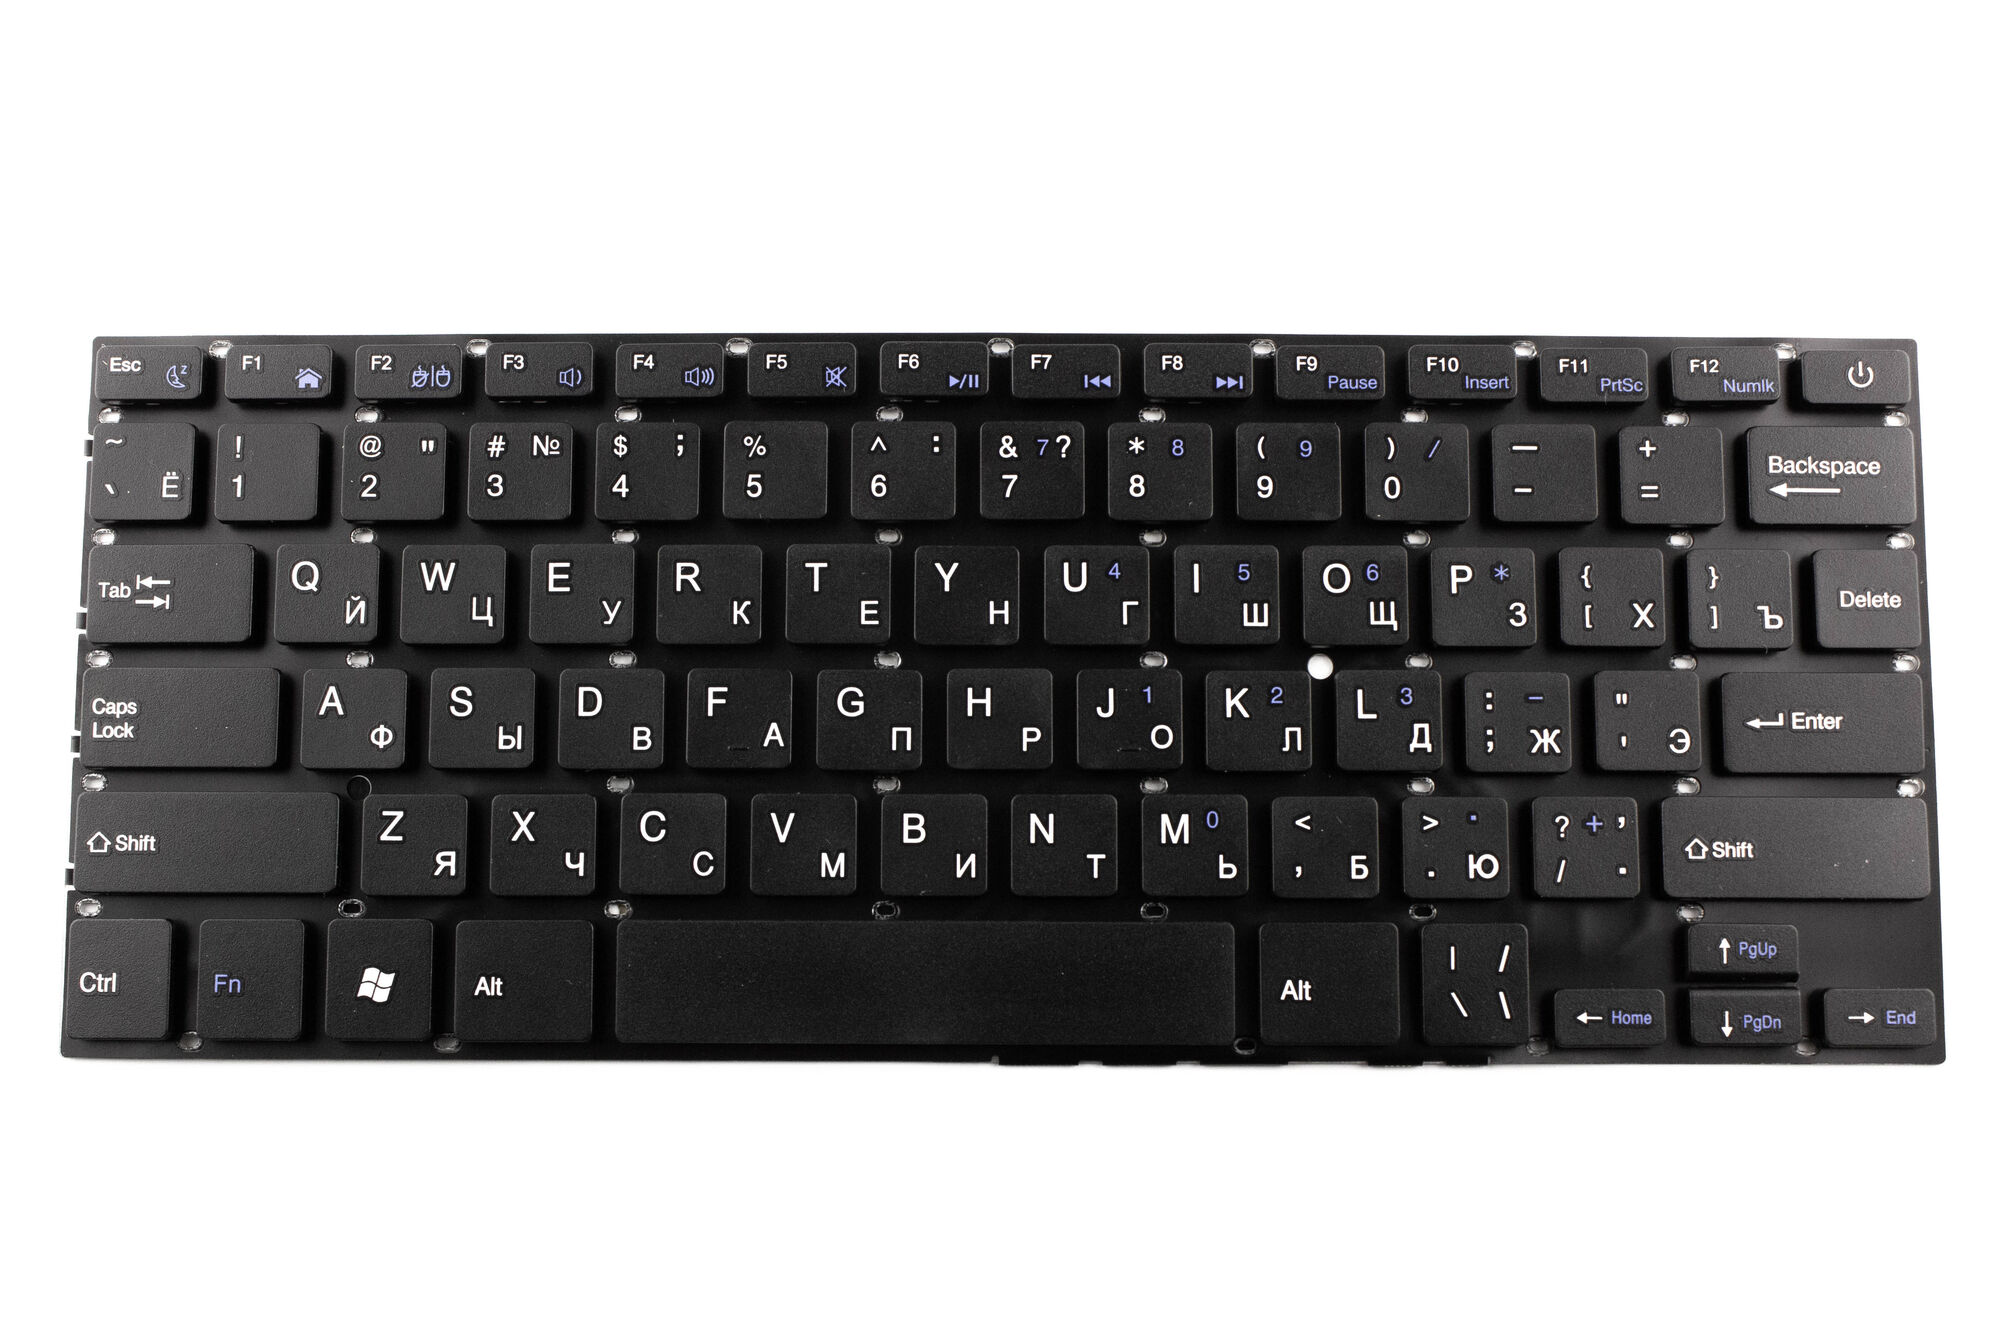 Клавиатура для ноутбука Prestigio 141C p/n: PSB141C01BFH